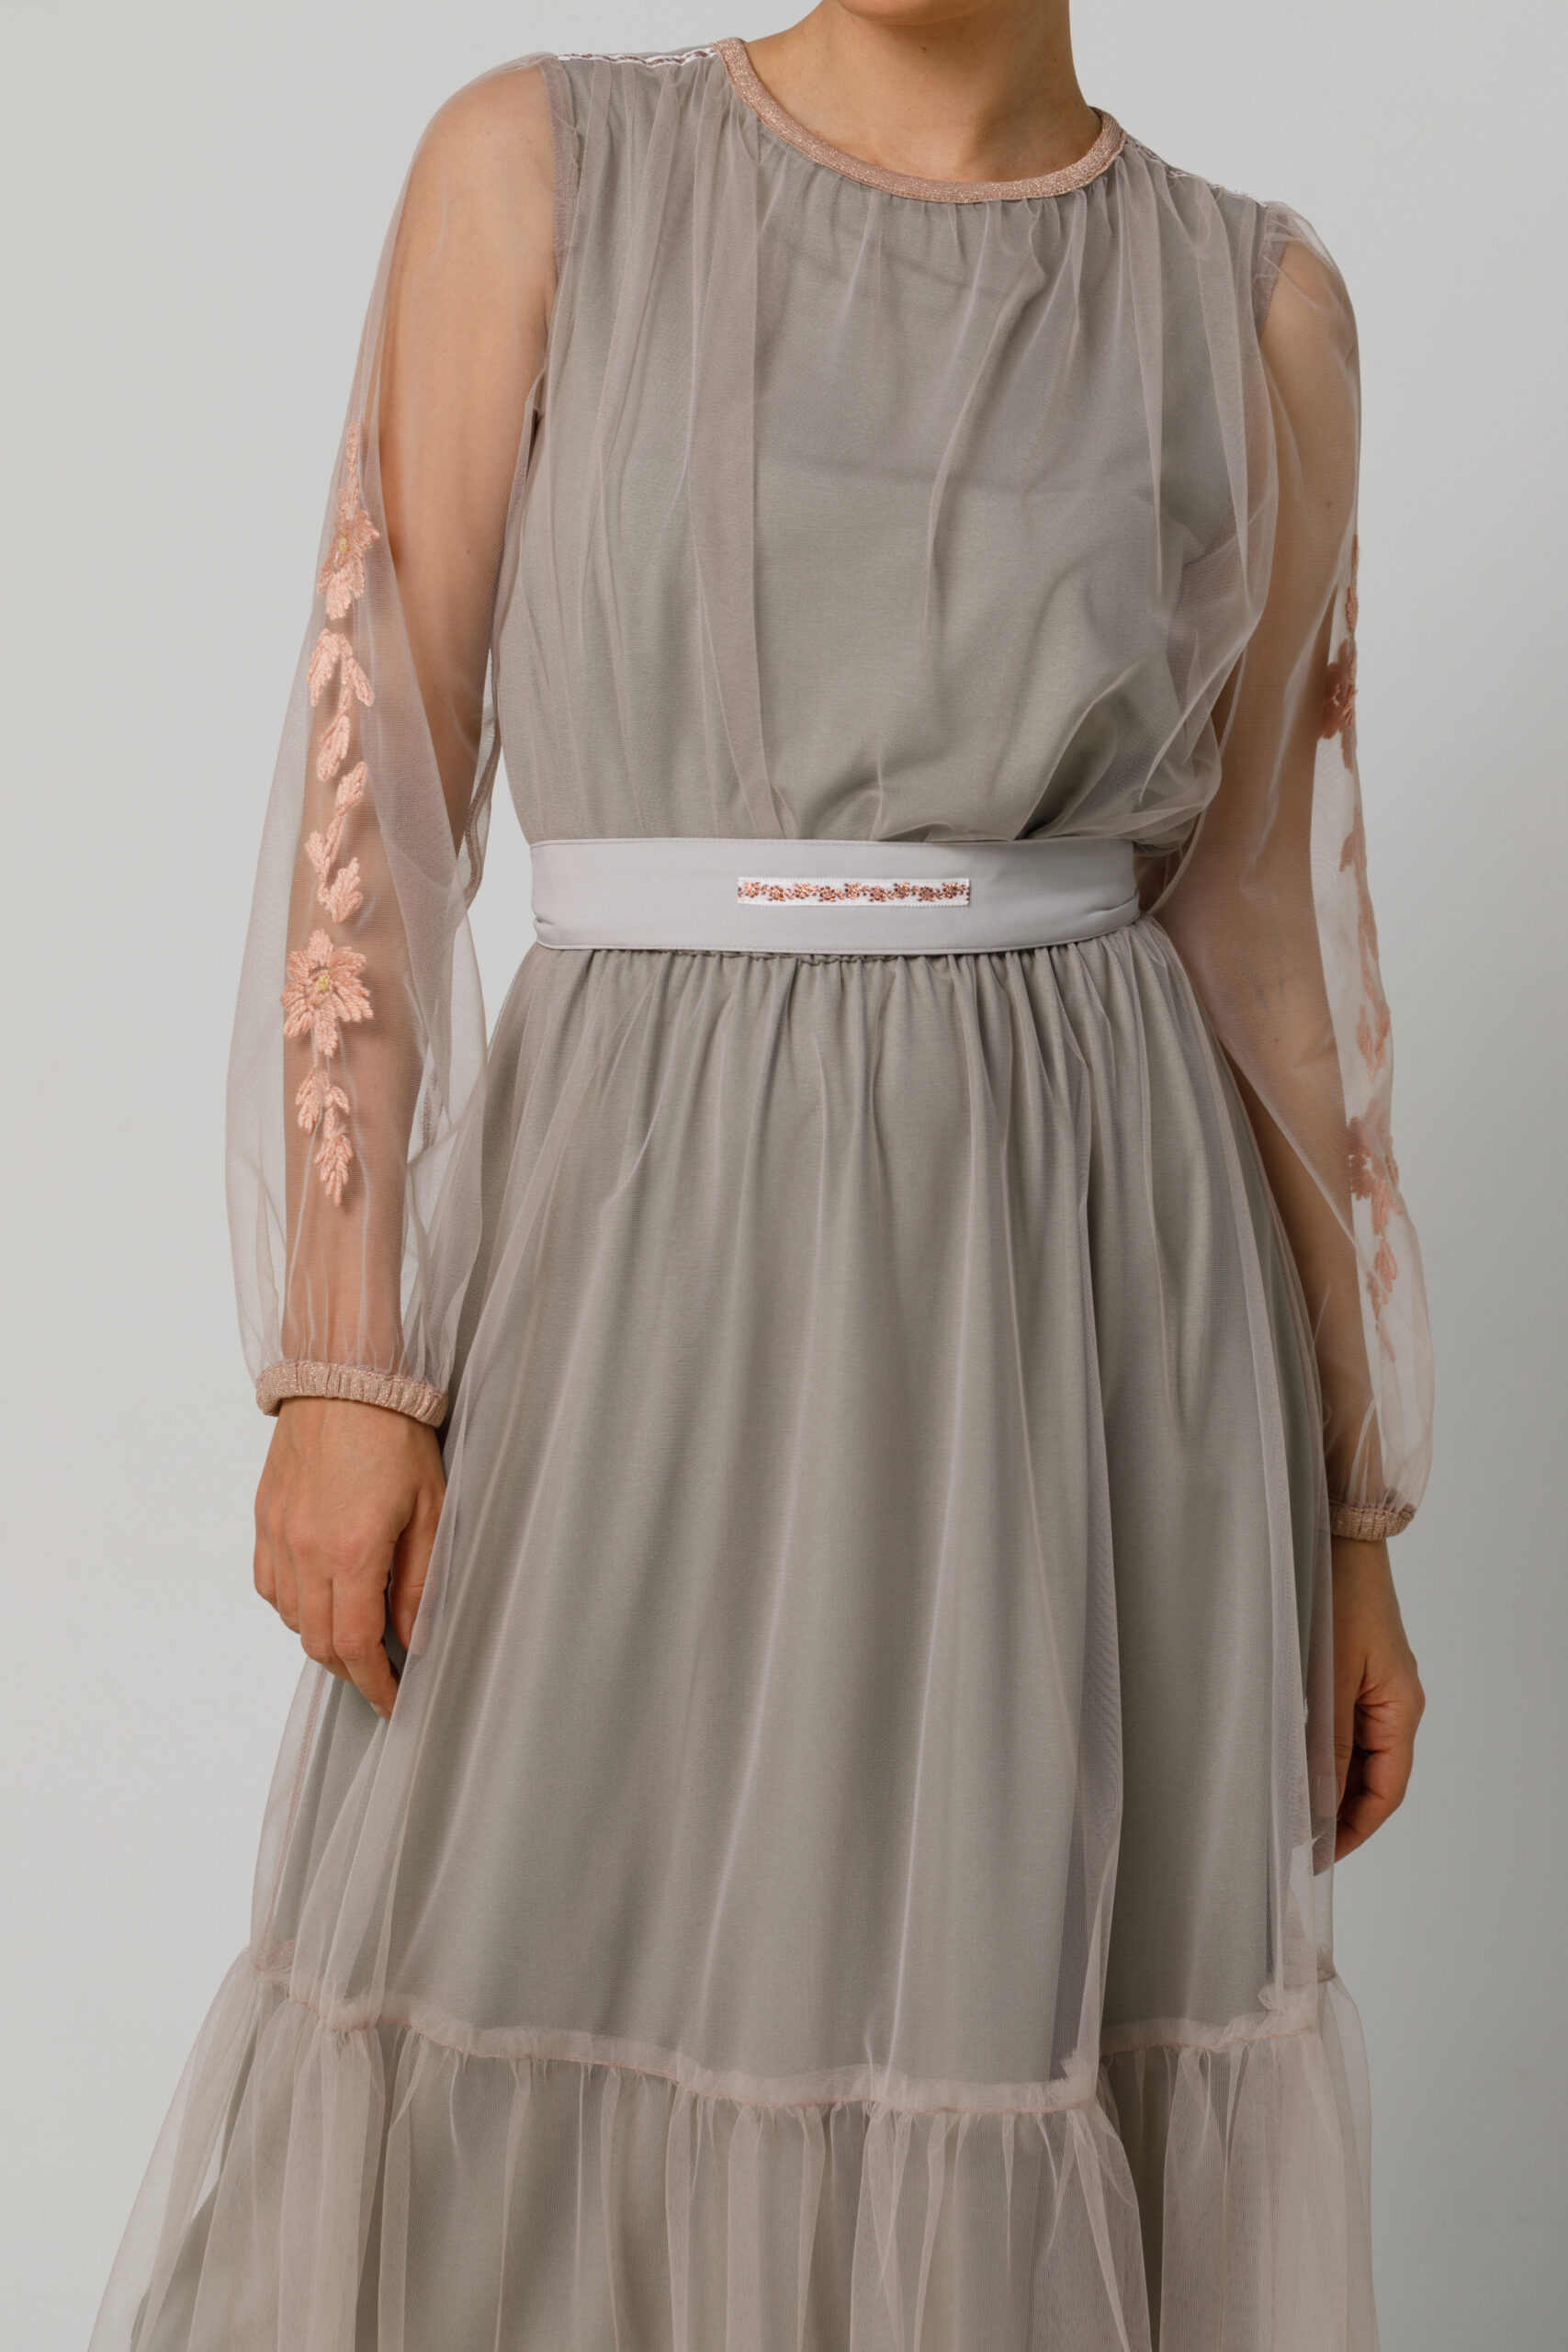 AMARIS short dress with floral embroidery. Natural fabrics, original design, handmade embroidery